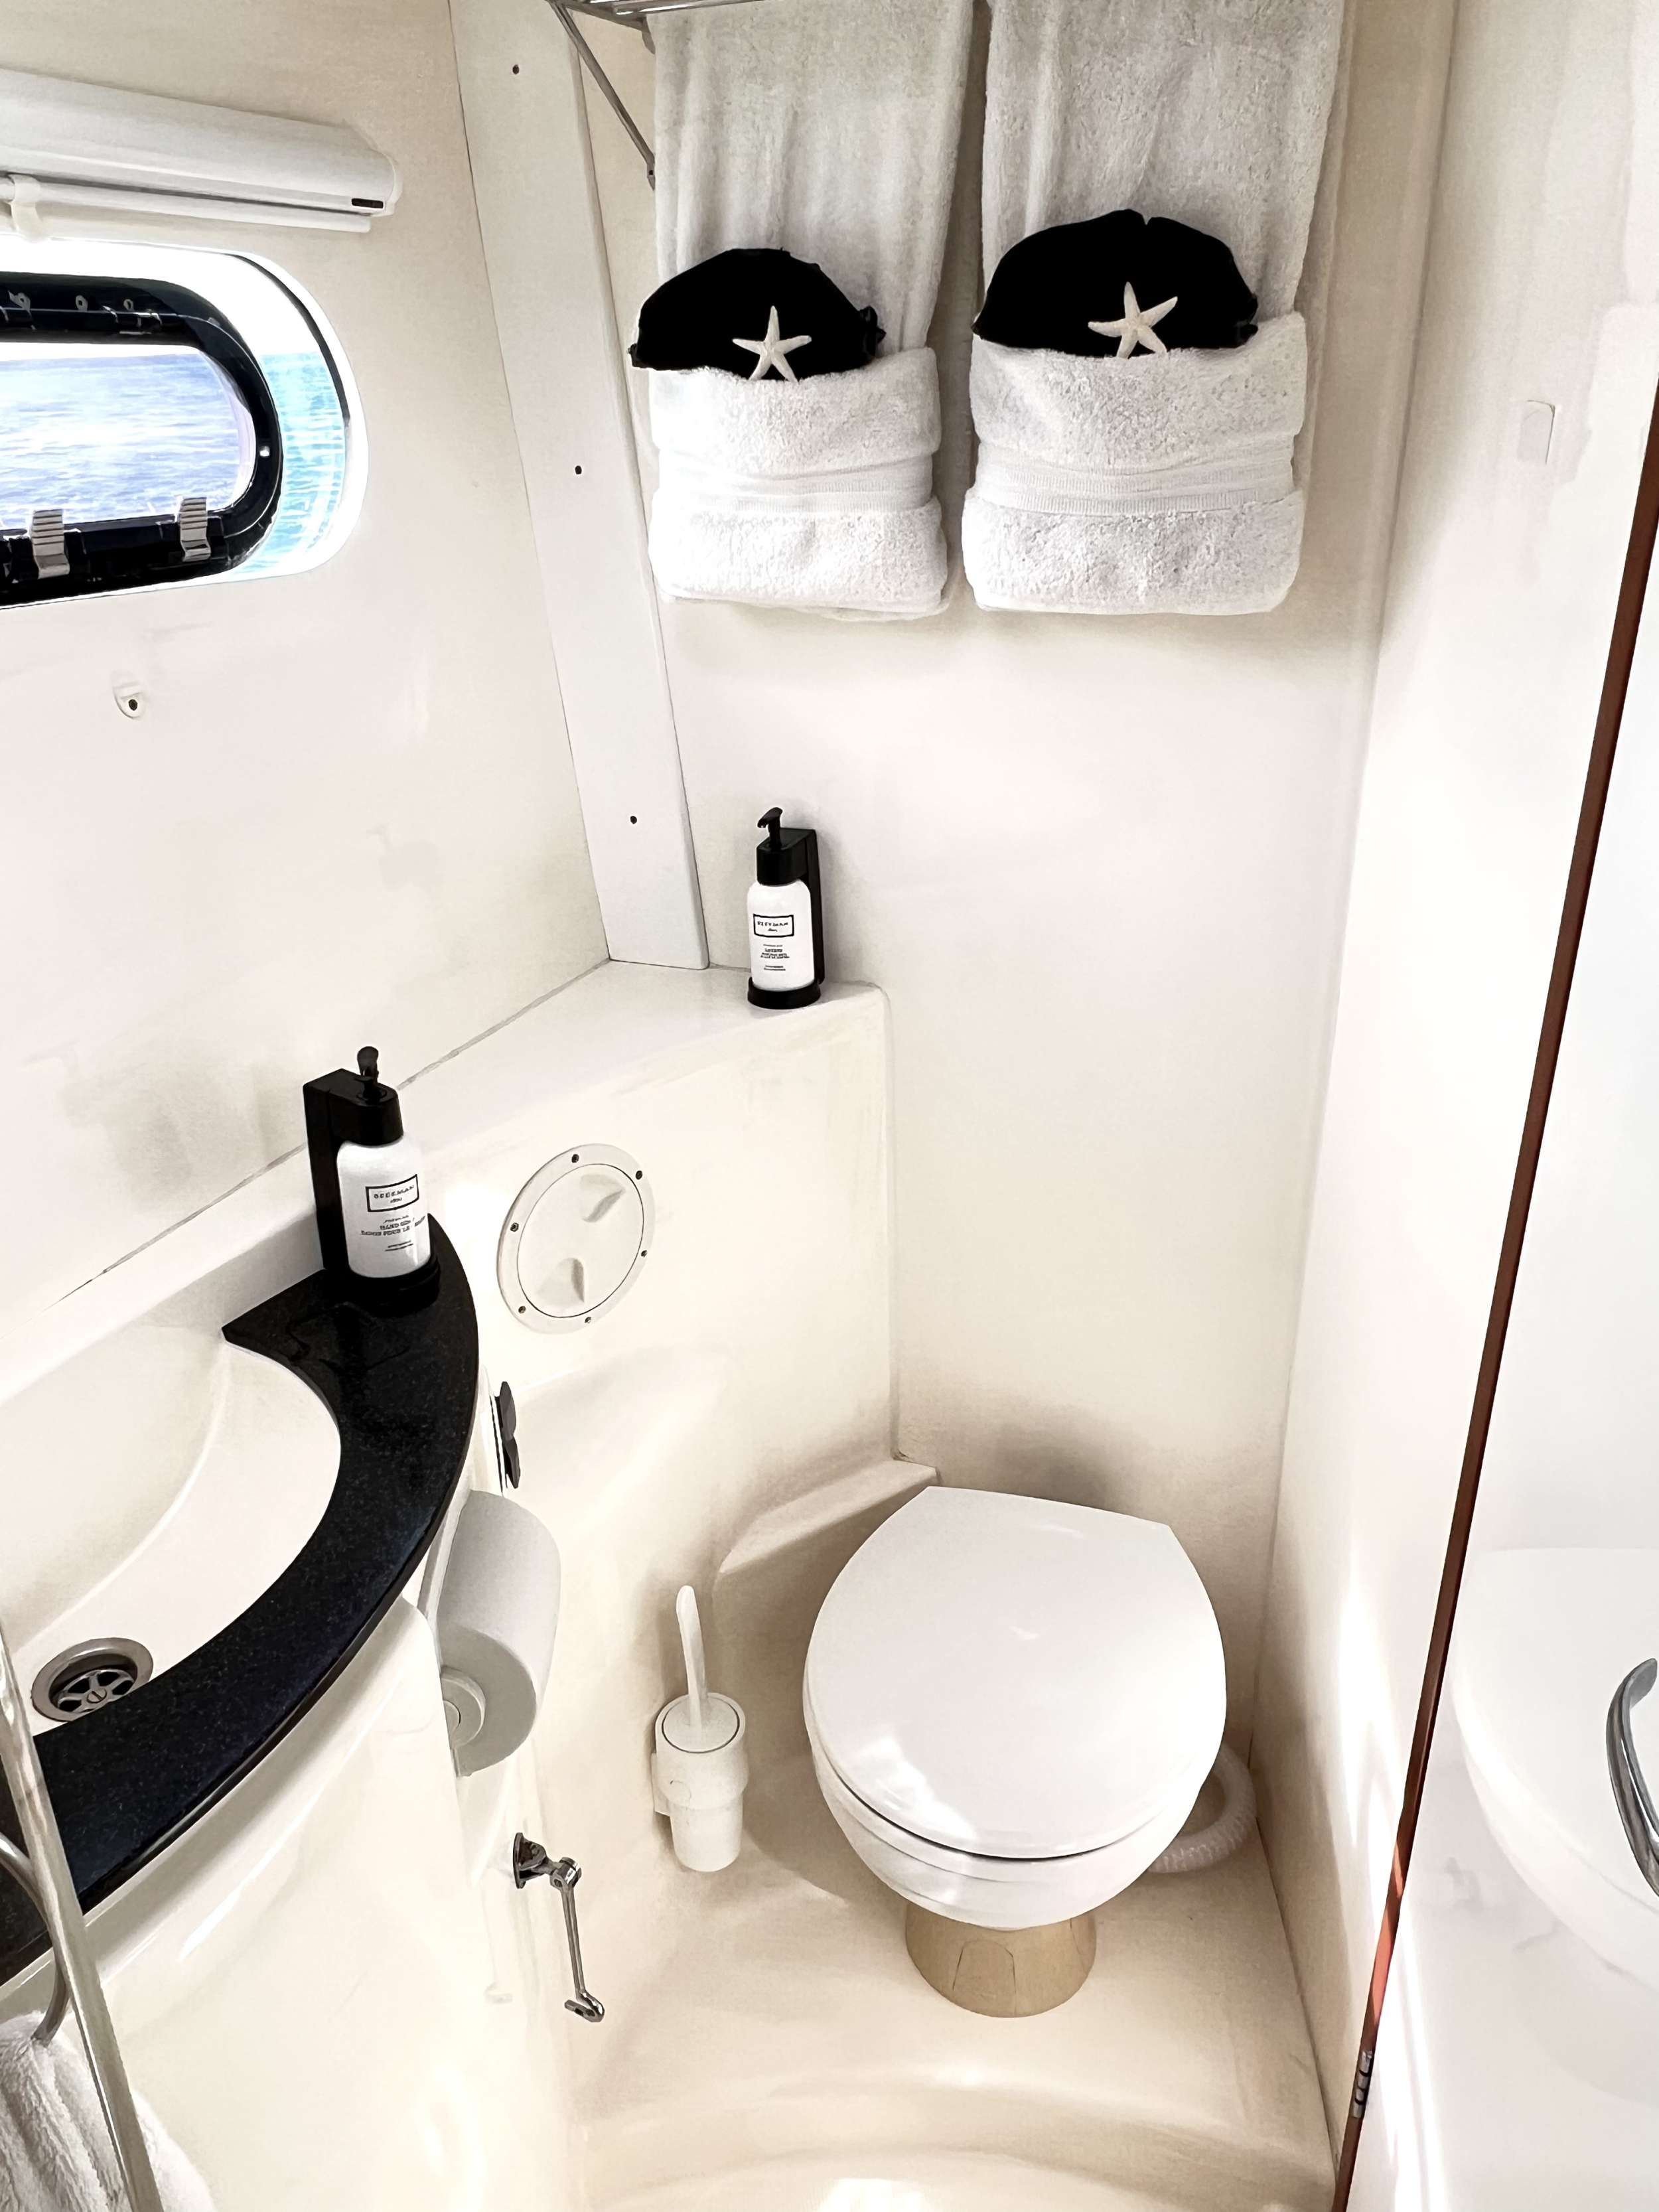 Catamaran Yacht 'STARFISH' En Suite Bathroom, 6 PAX, 2 Crew, 46.00 Ft, 14.00 Meters, Built 2008, Leopard, Refit Year 2019